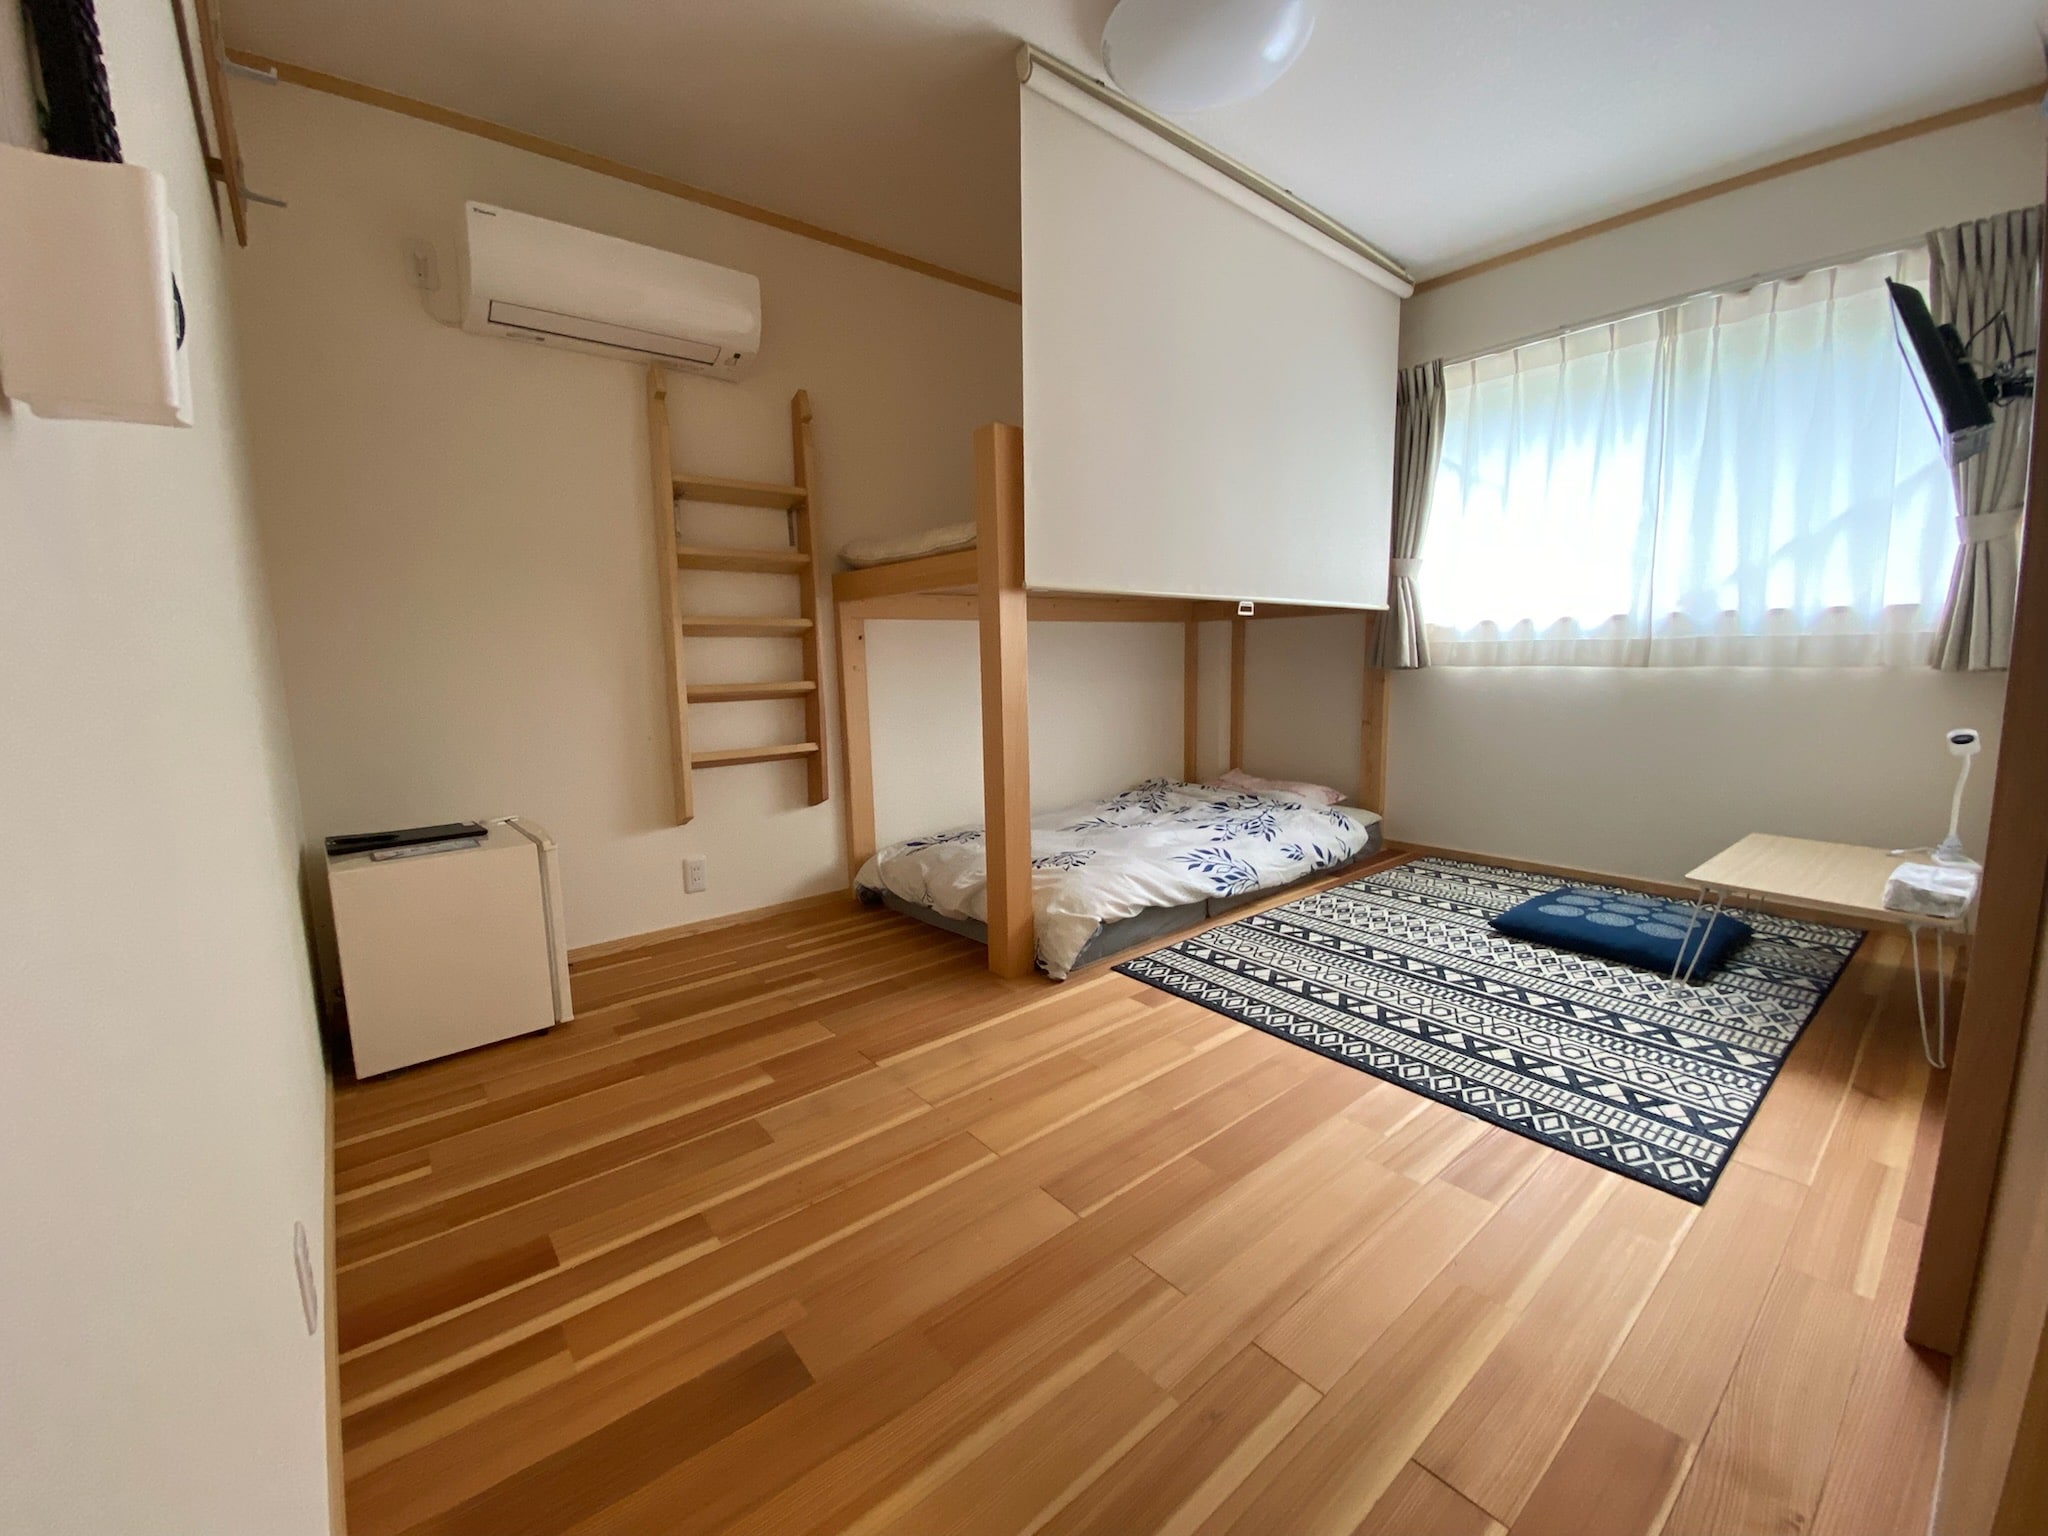 Wajiki (Western-style room with bunk beds) 5.5 tatami mats